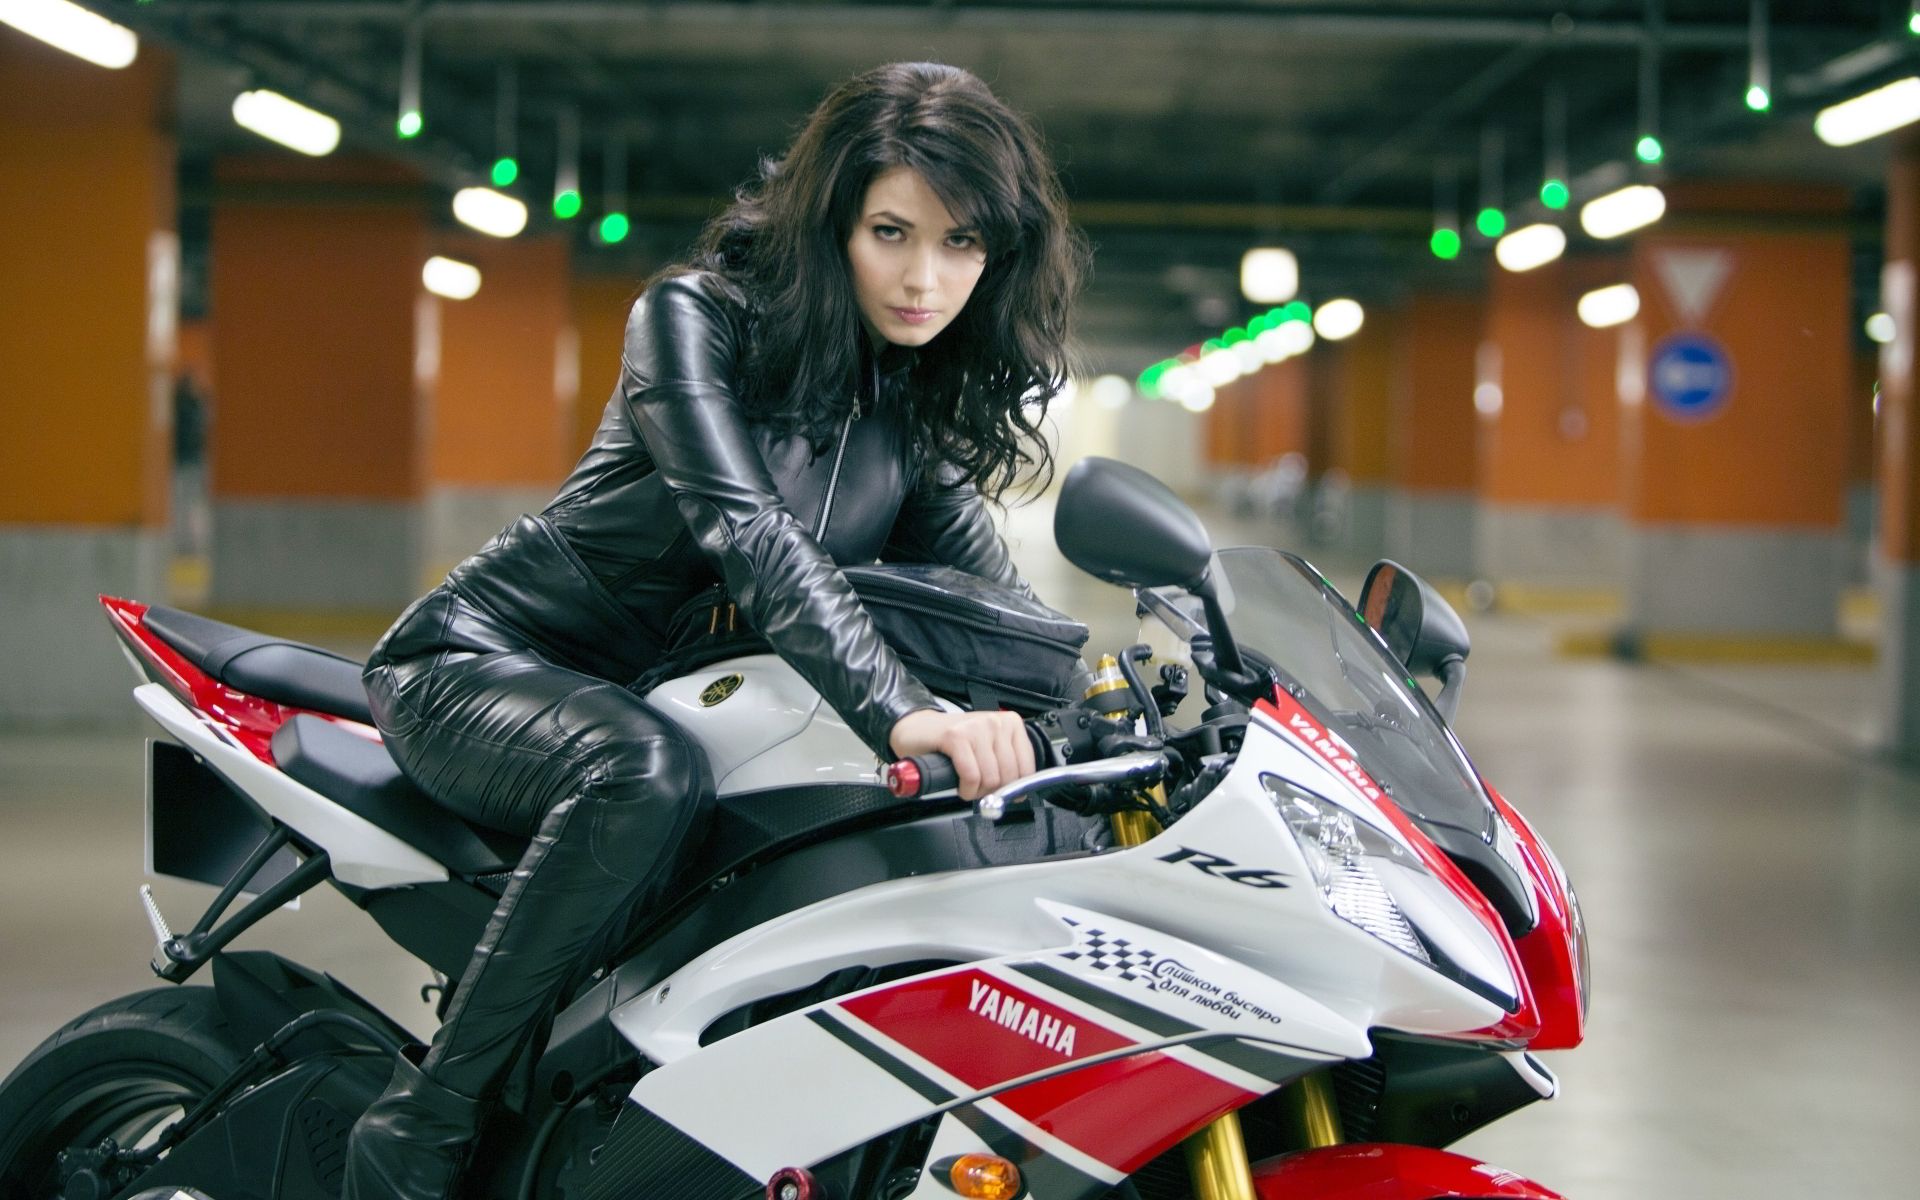 Yulia Snigir Posing on Yamaha | Bikes Wallpapers | Pinterest ...